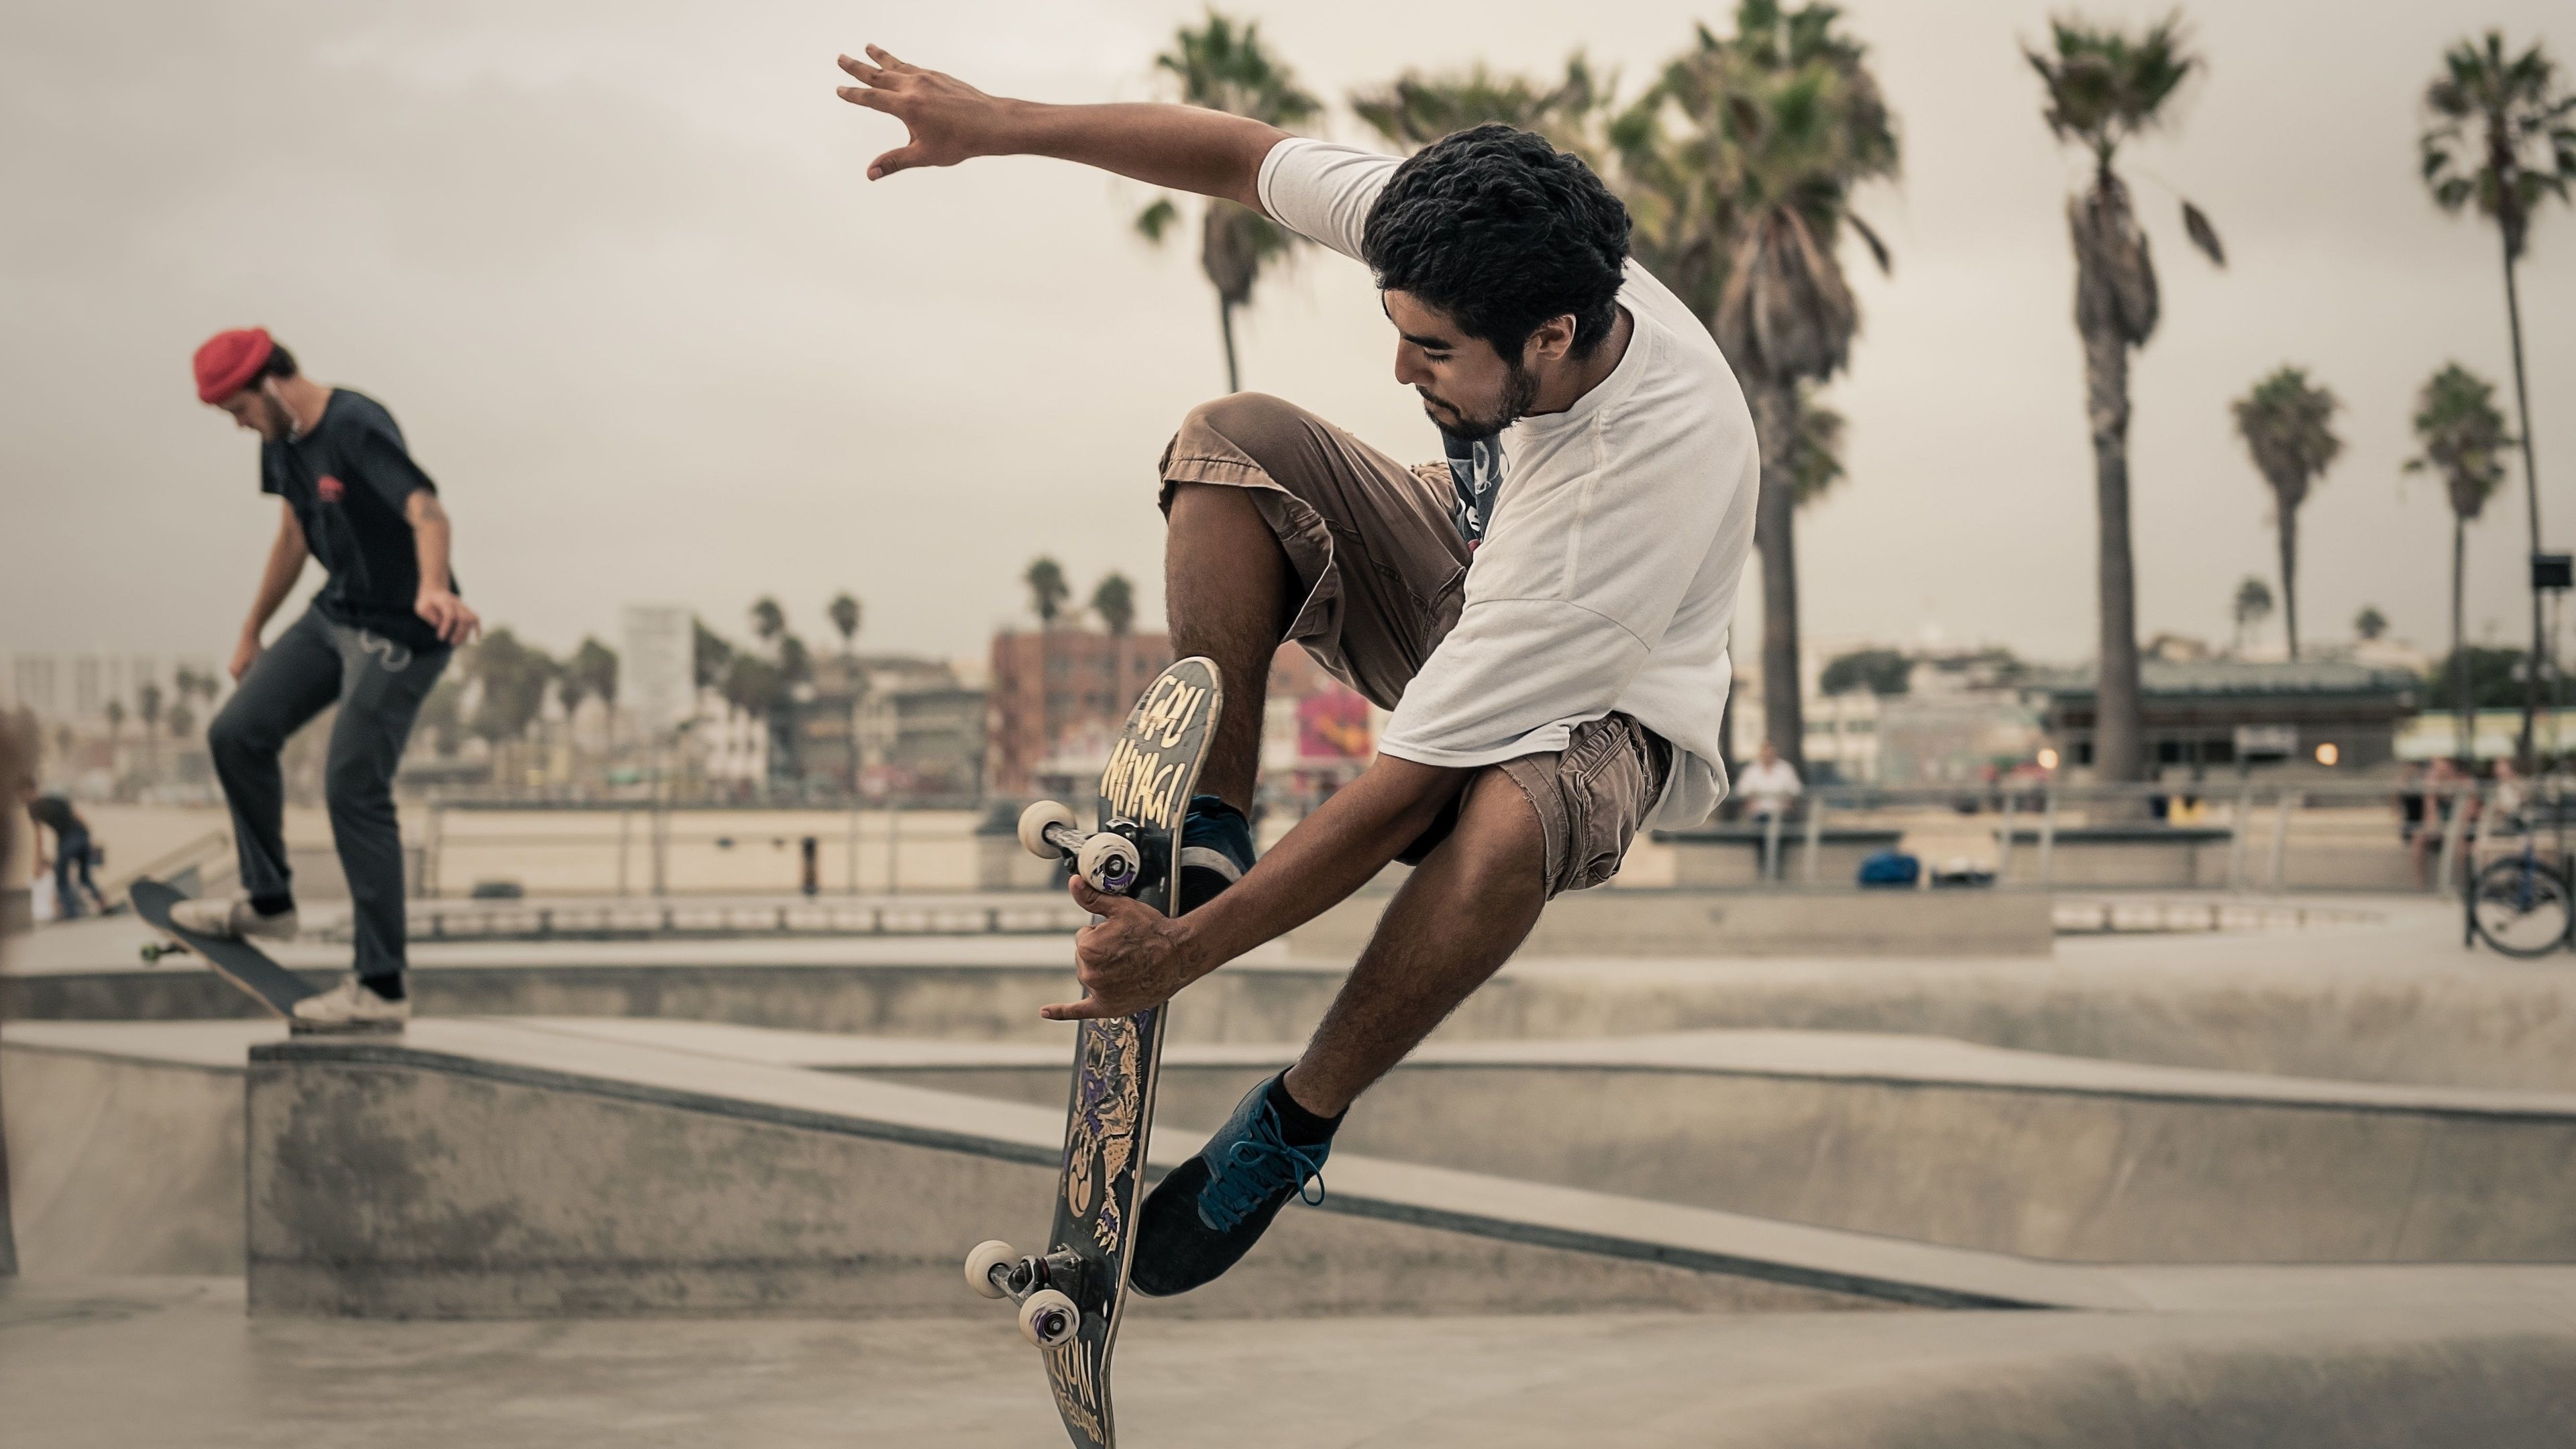 Skateboarding: Street action sport in a skatepark, Recreational activity and performing tricks. 3840x2160 4K Wallpaper.